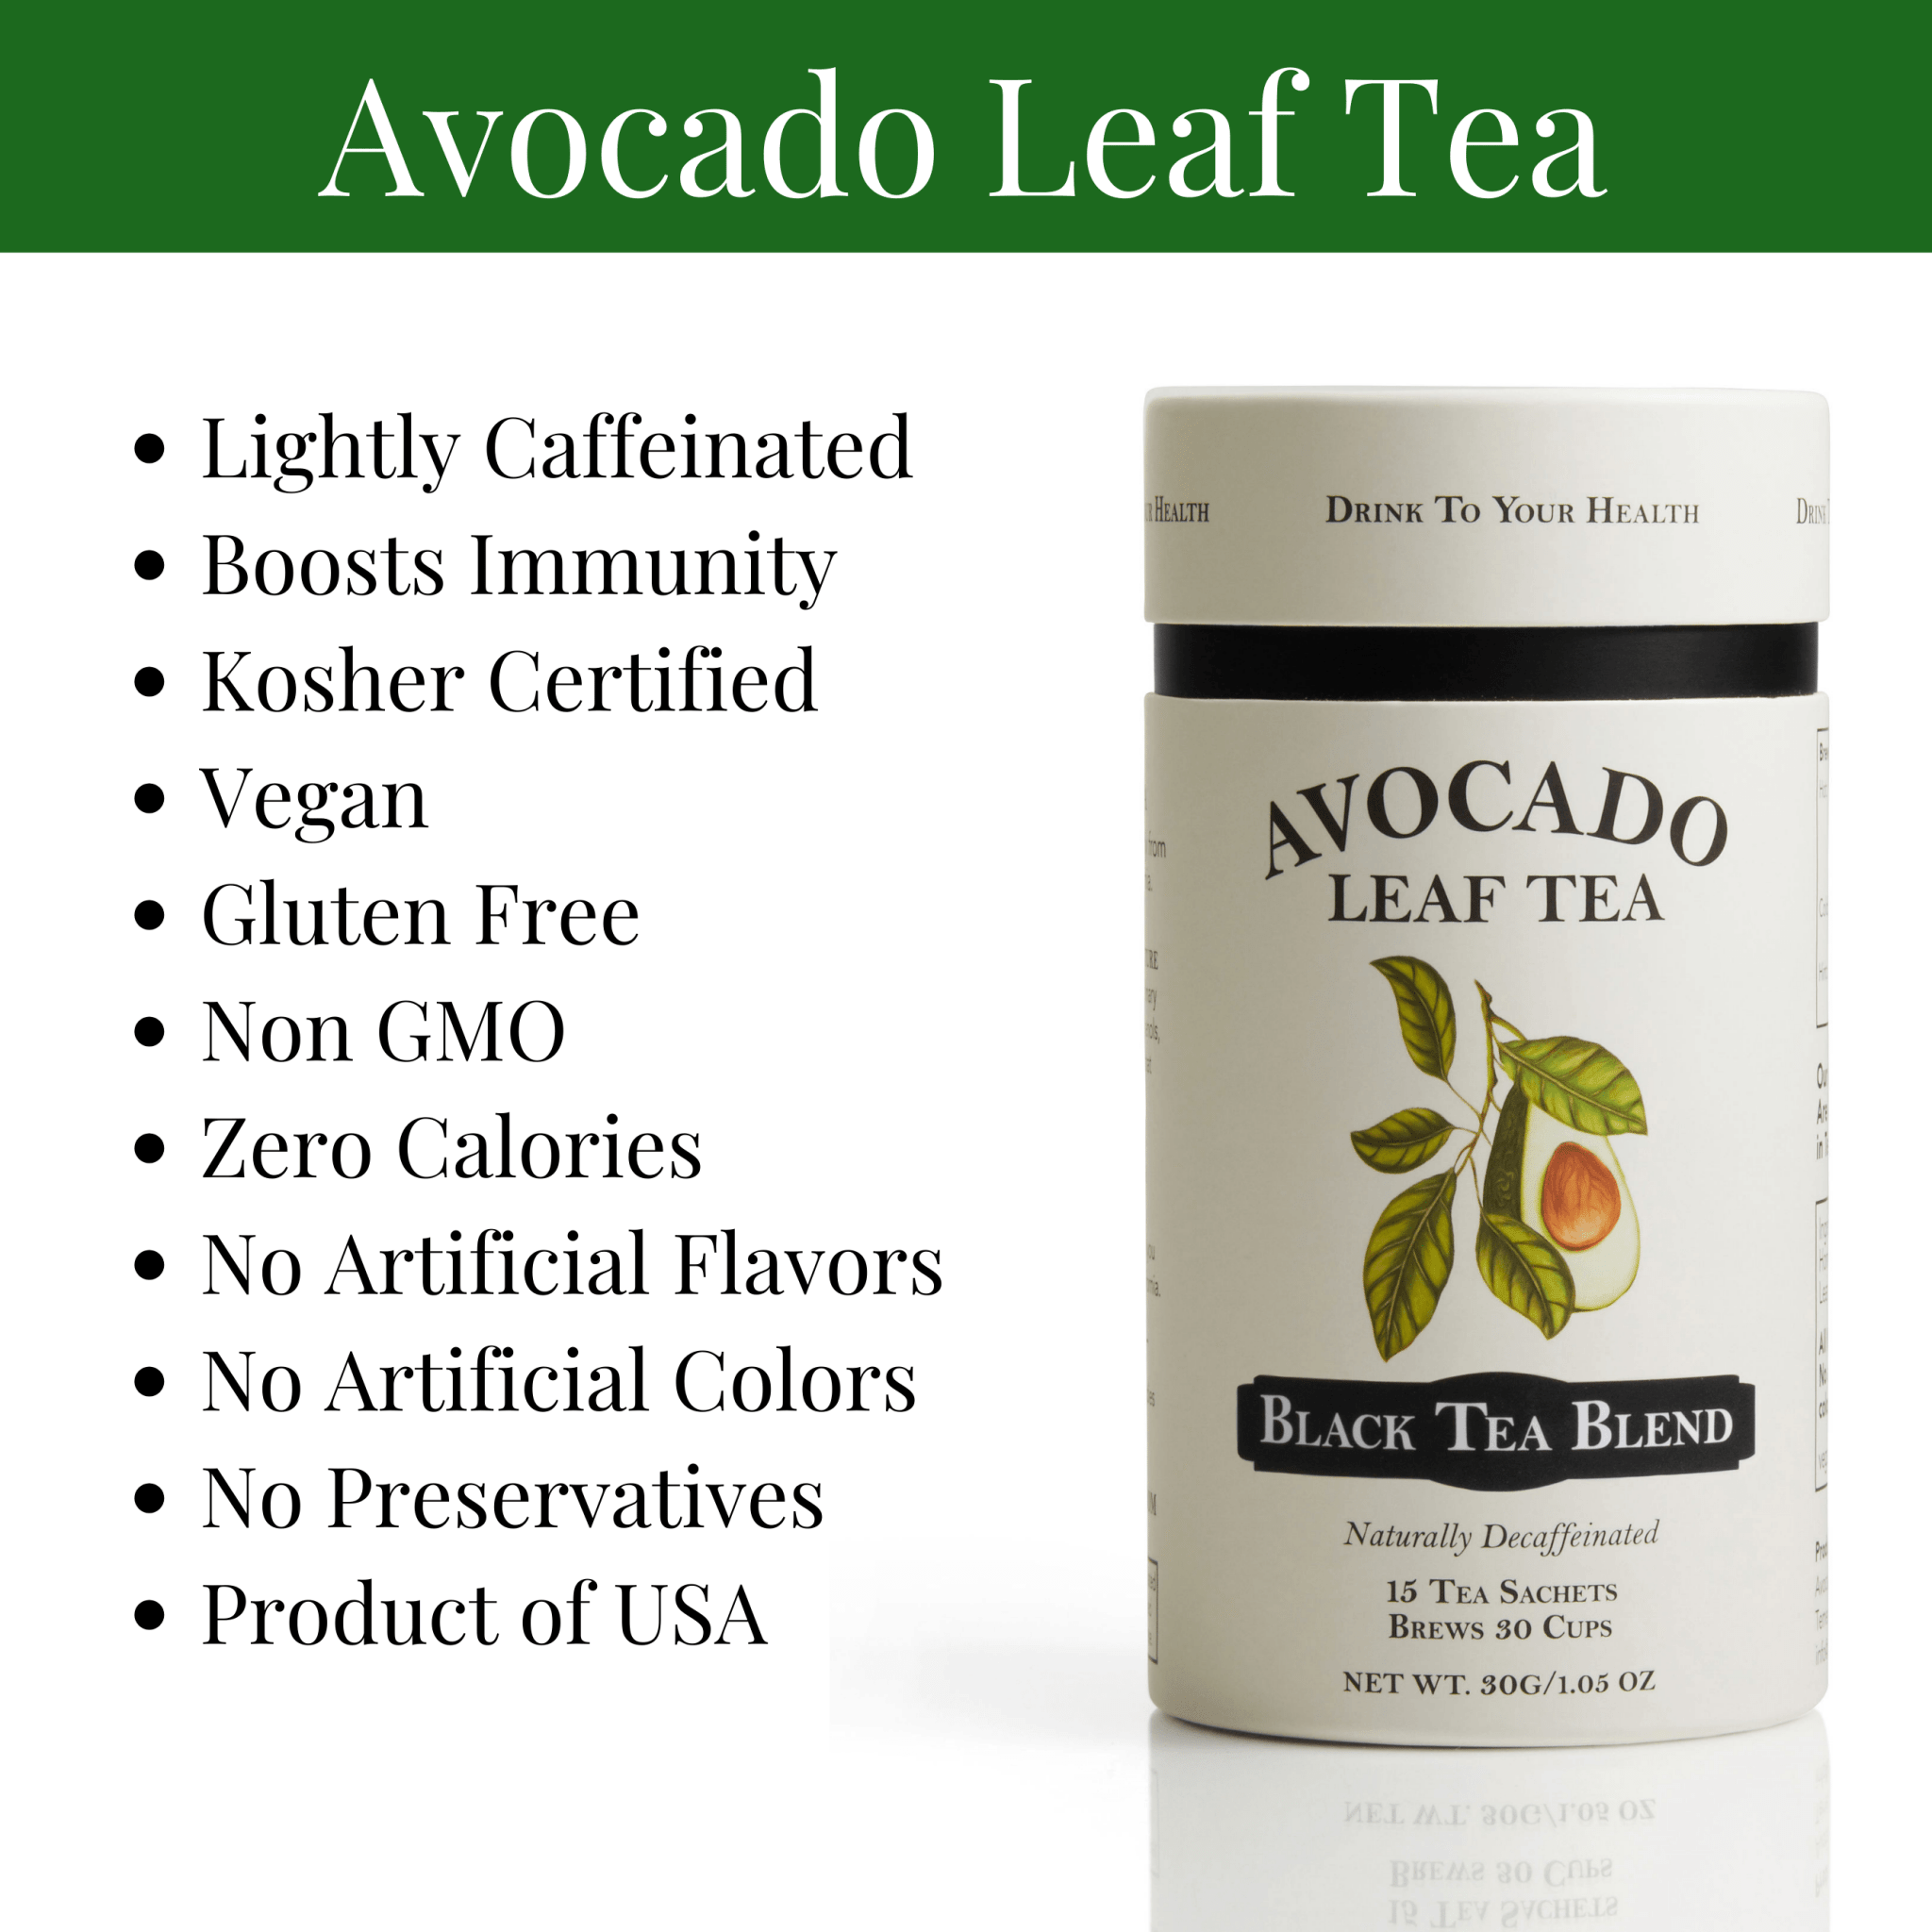 Natural avocado leaf tea, longevity, antioxidant rich, wellness beverage, unique tea blend, vegan friendly, buy avocado tea